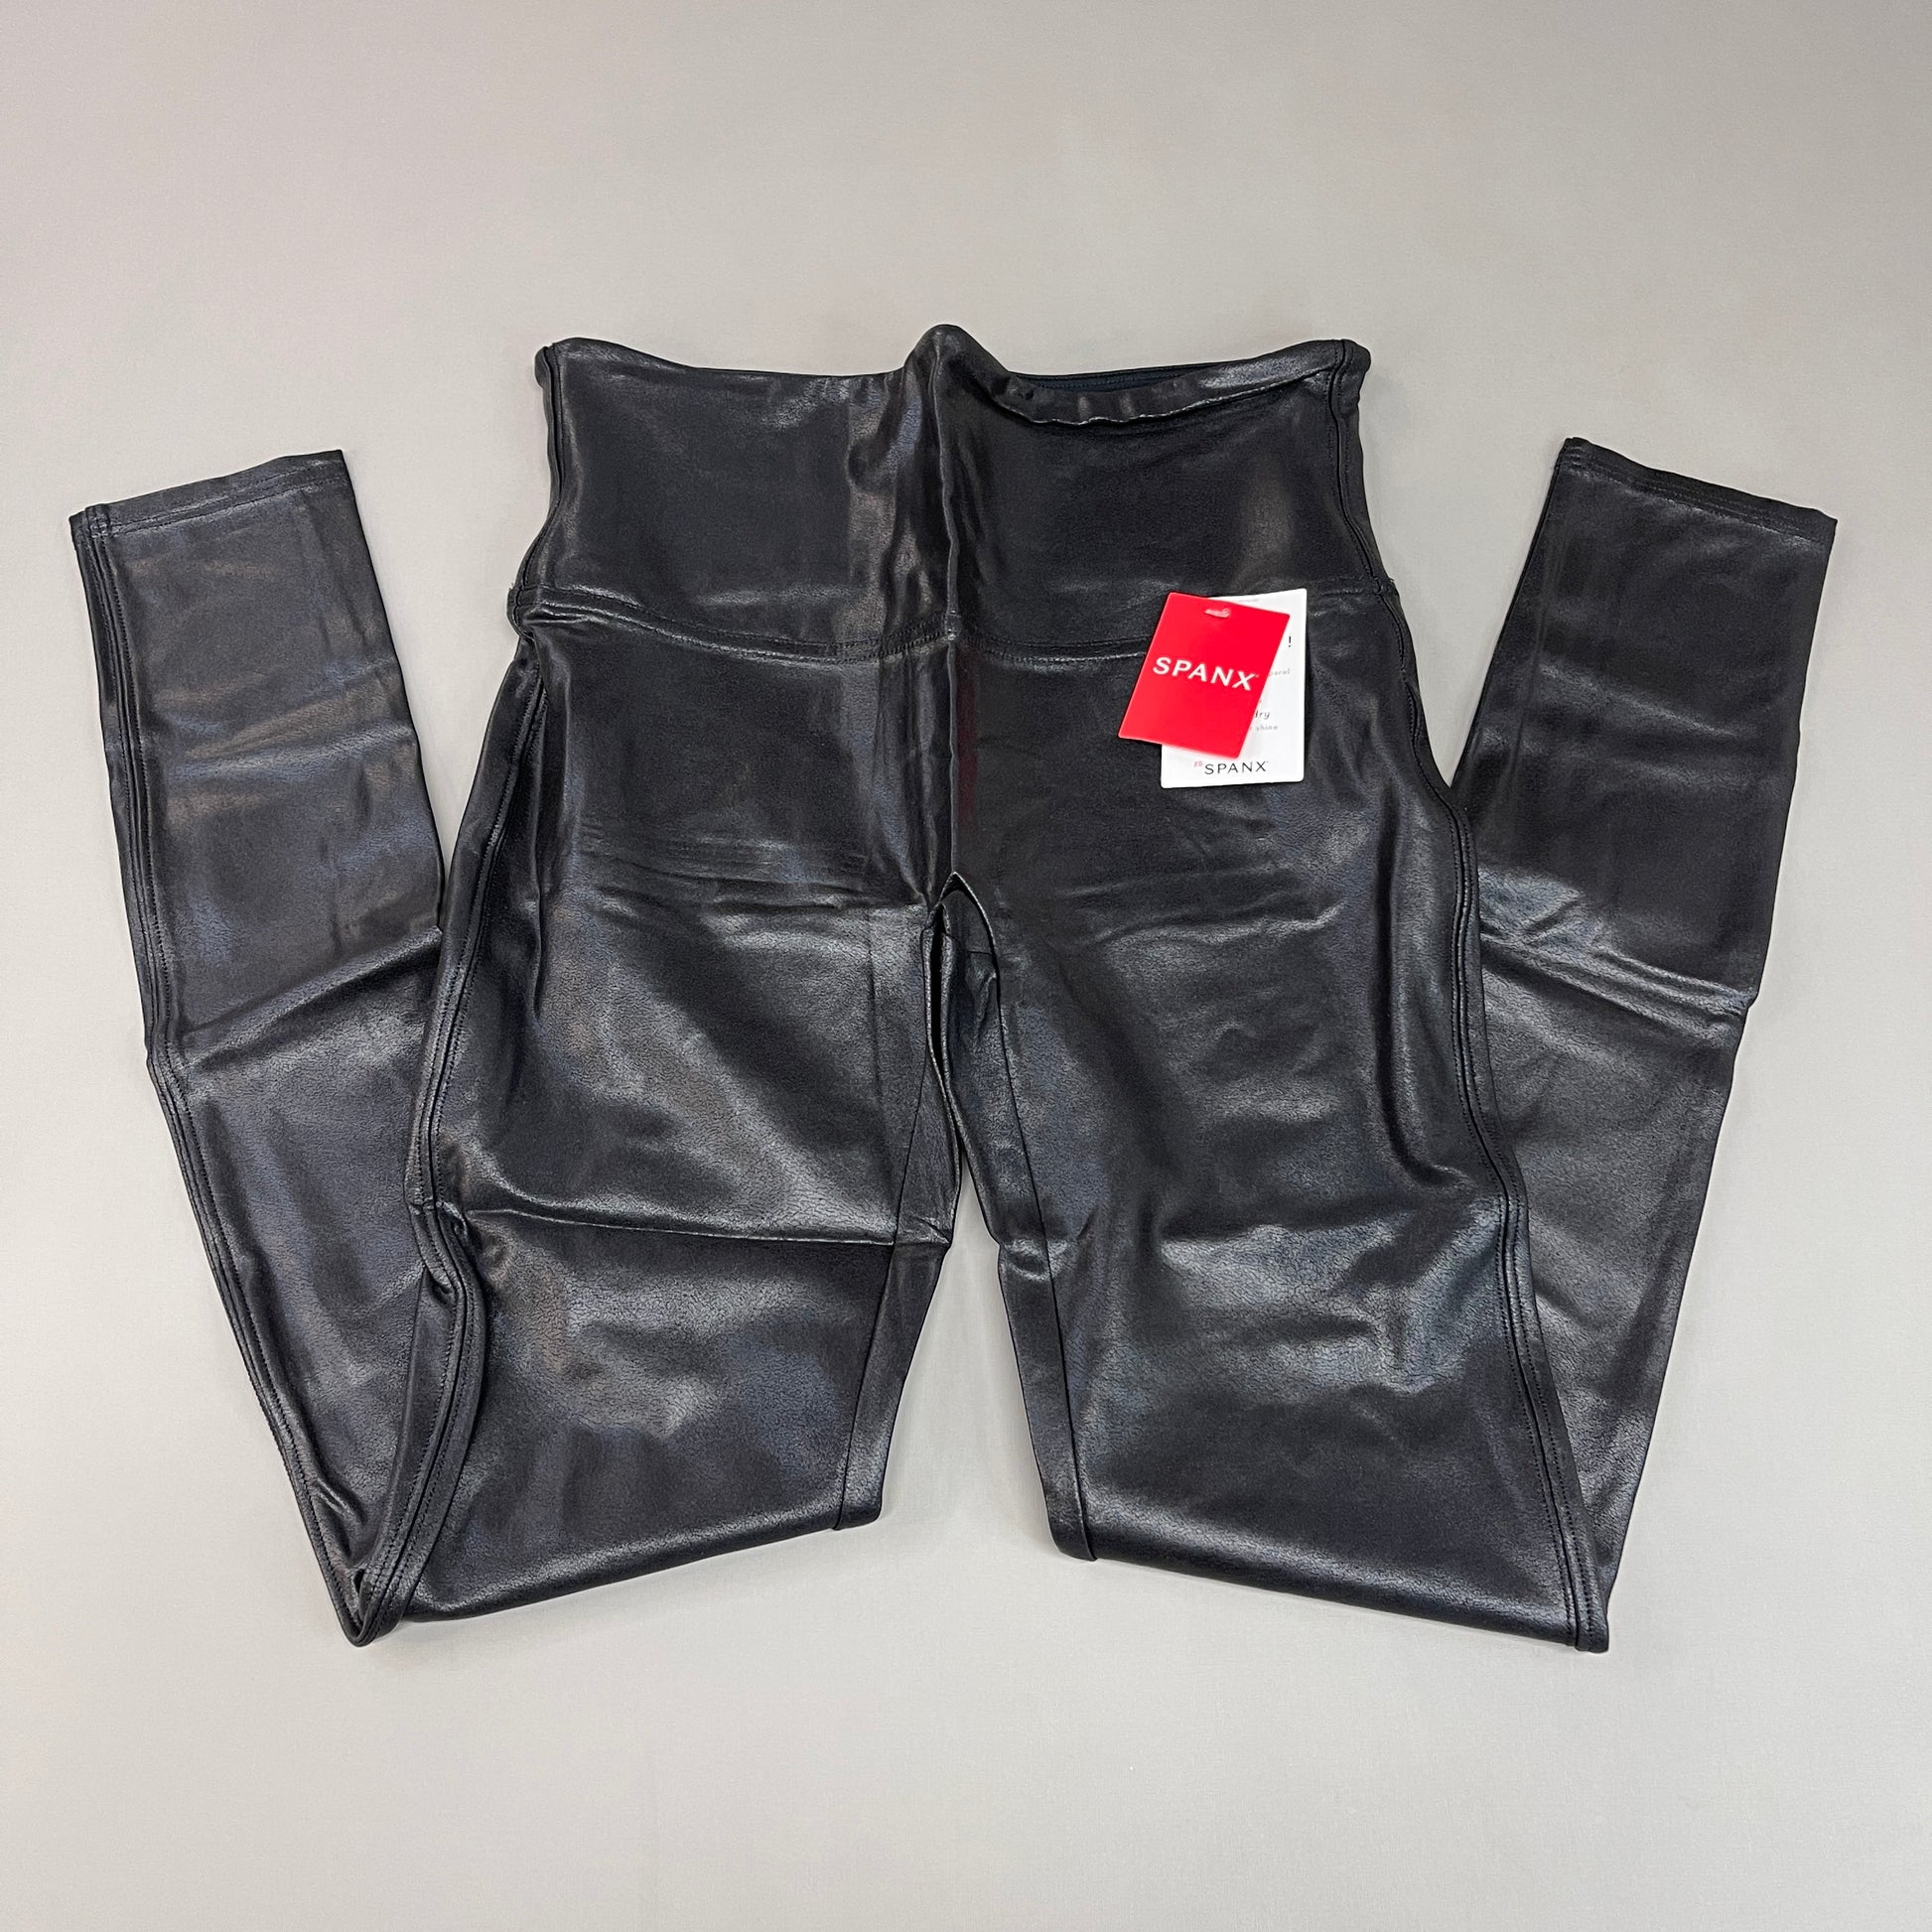 SPANX Women's Faux Leather Leggings 2437, Black, Medium at